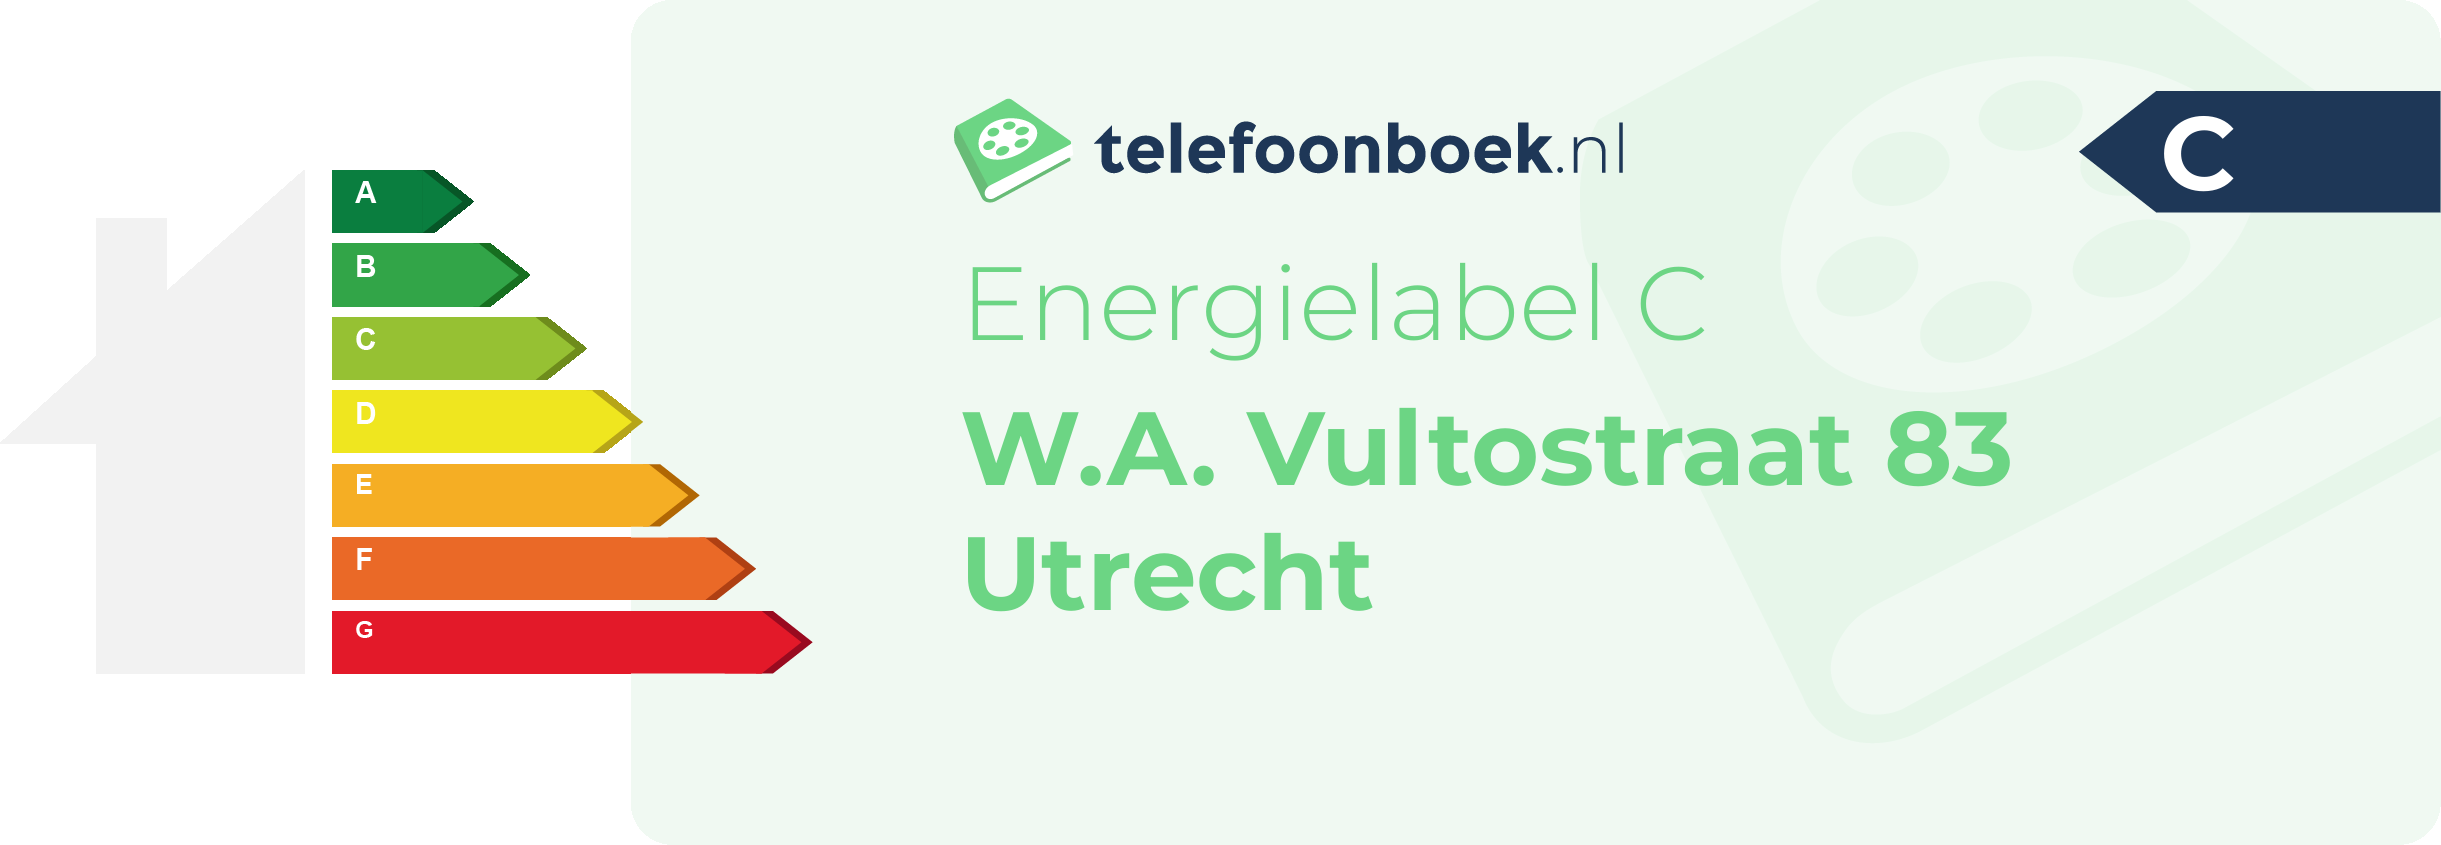 Energielabel W.A. Vultostraat 83 Utrecht